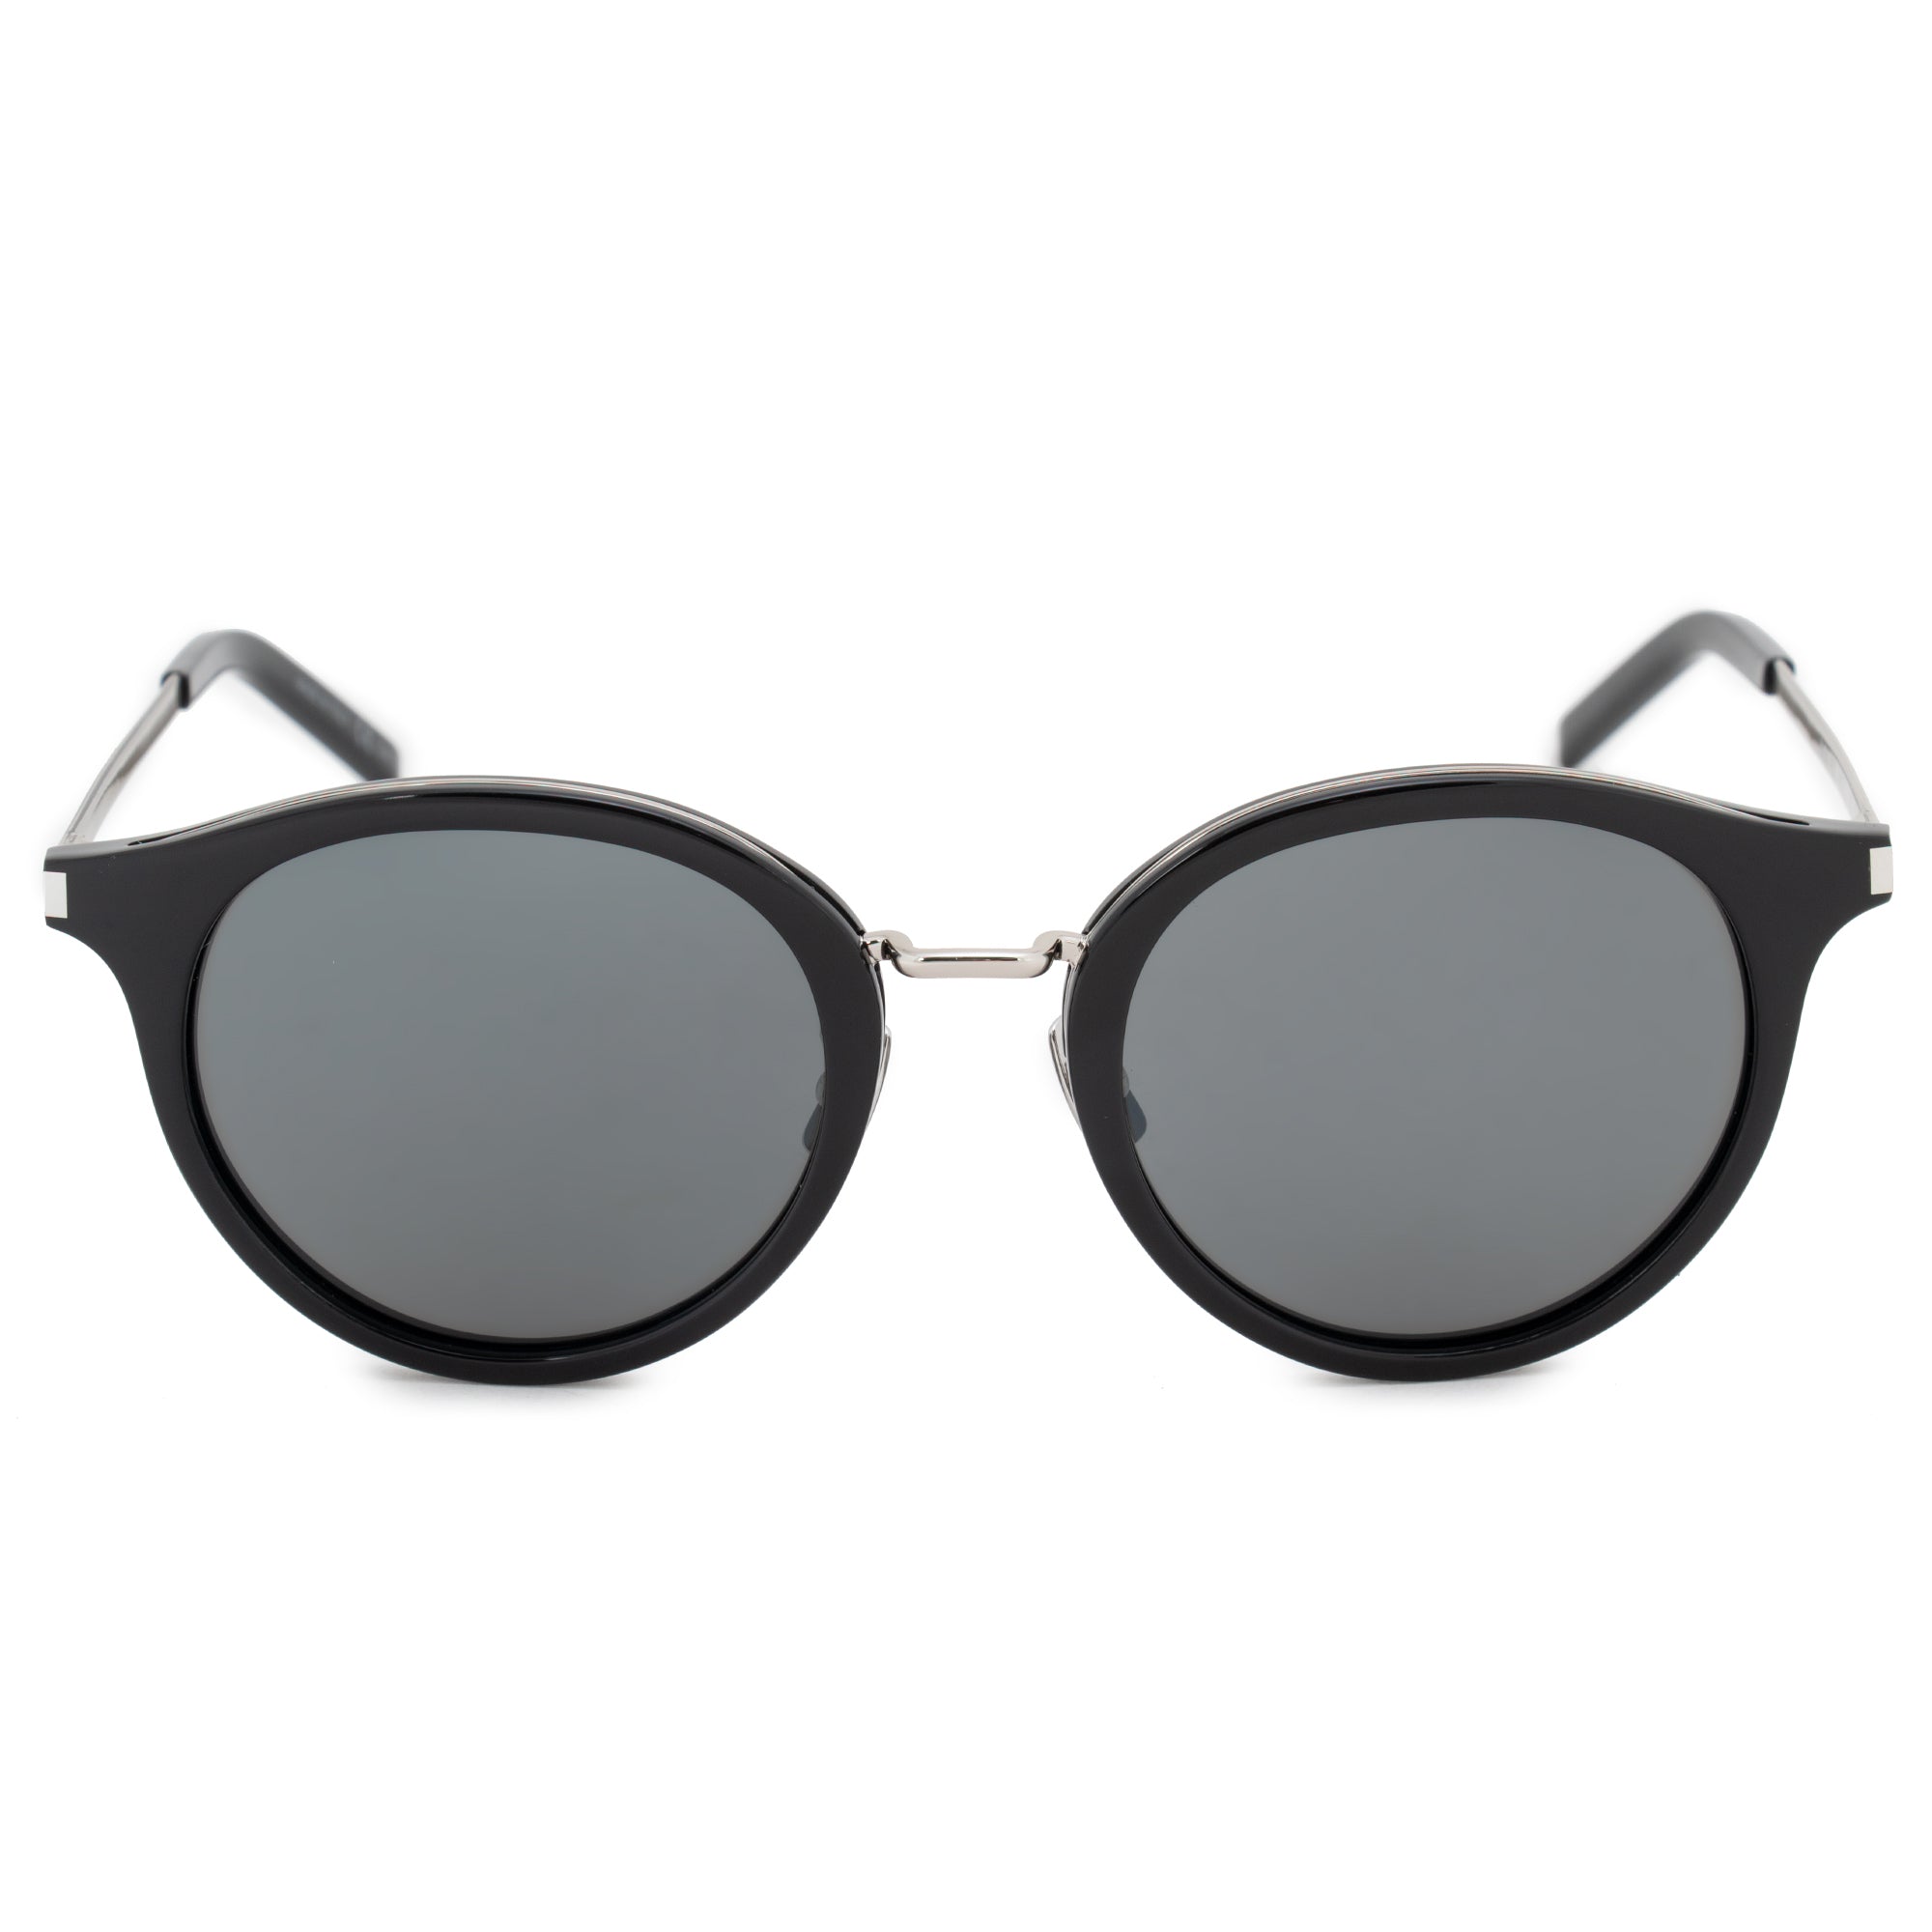 Saint Laurent Cateye Sunglasses SL57 002 49